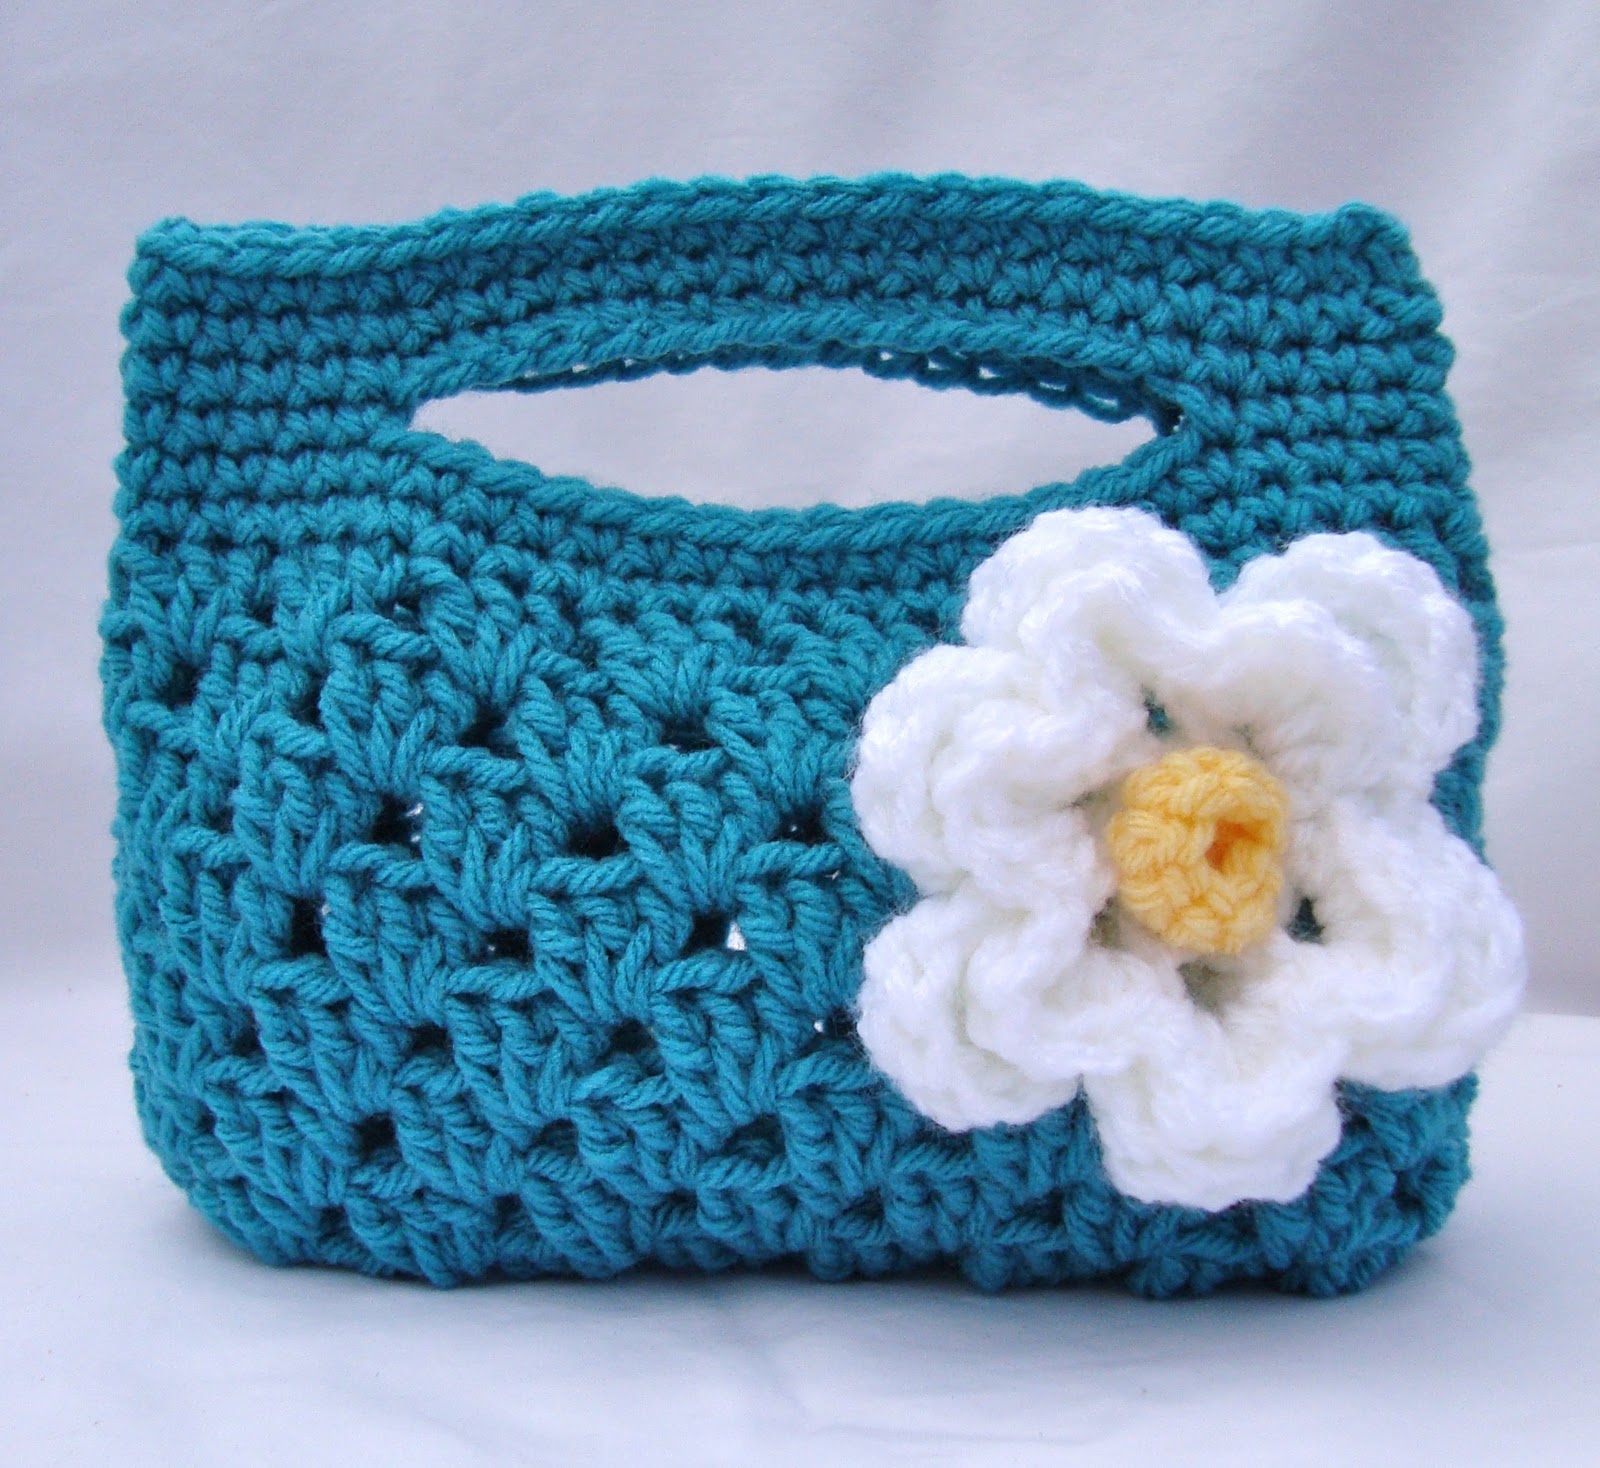 Crochet Shell Stitch Granny Stripe Boutique Bag Free Pattern